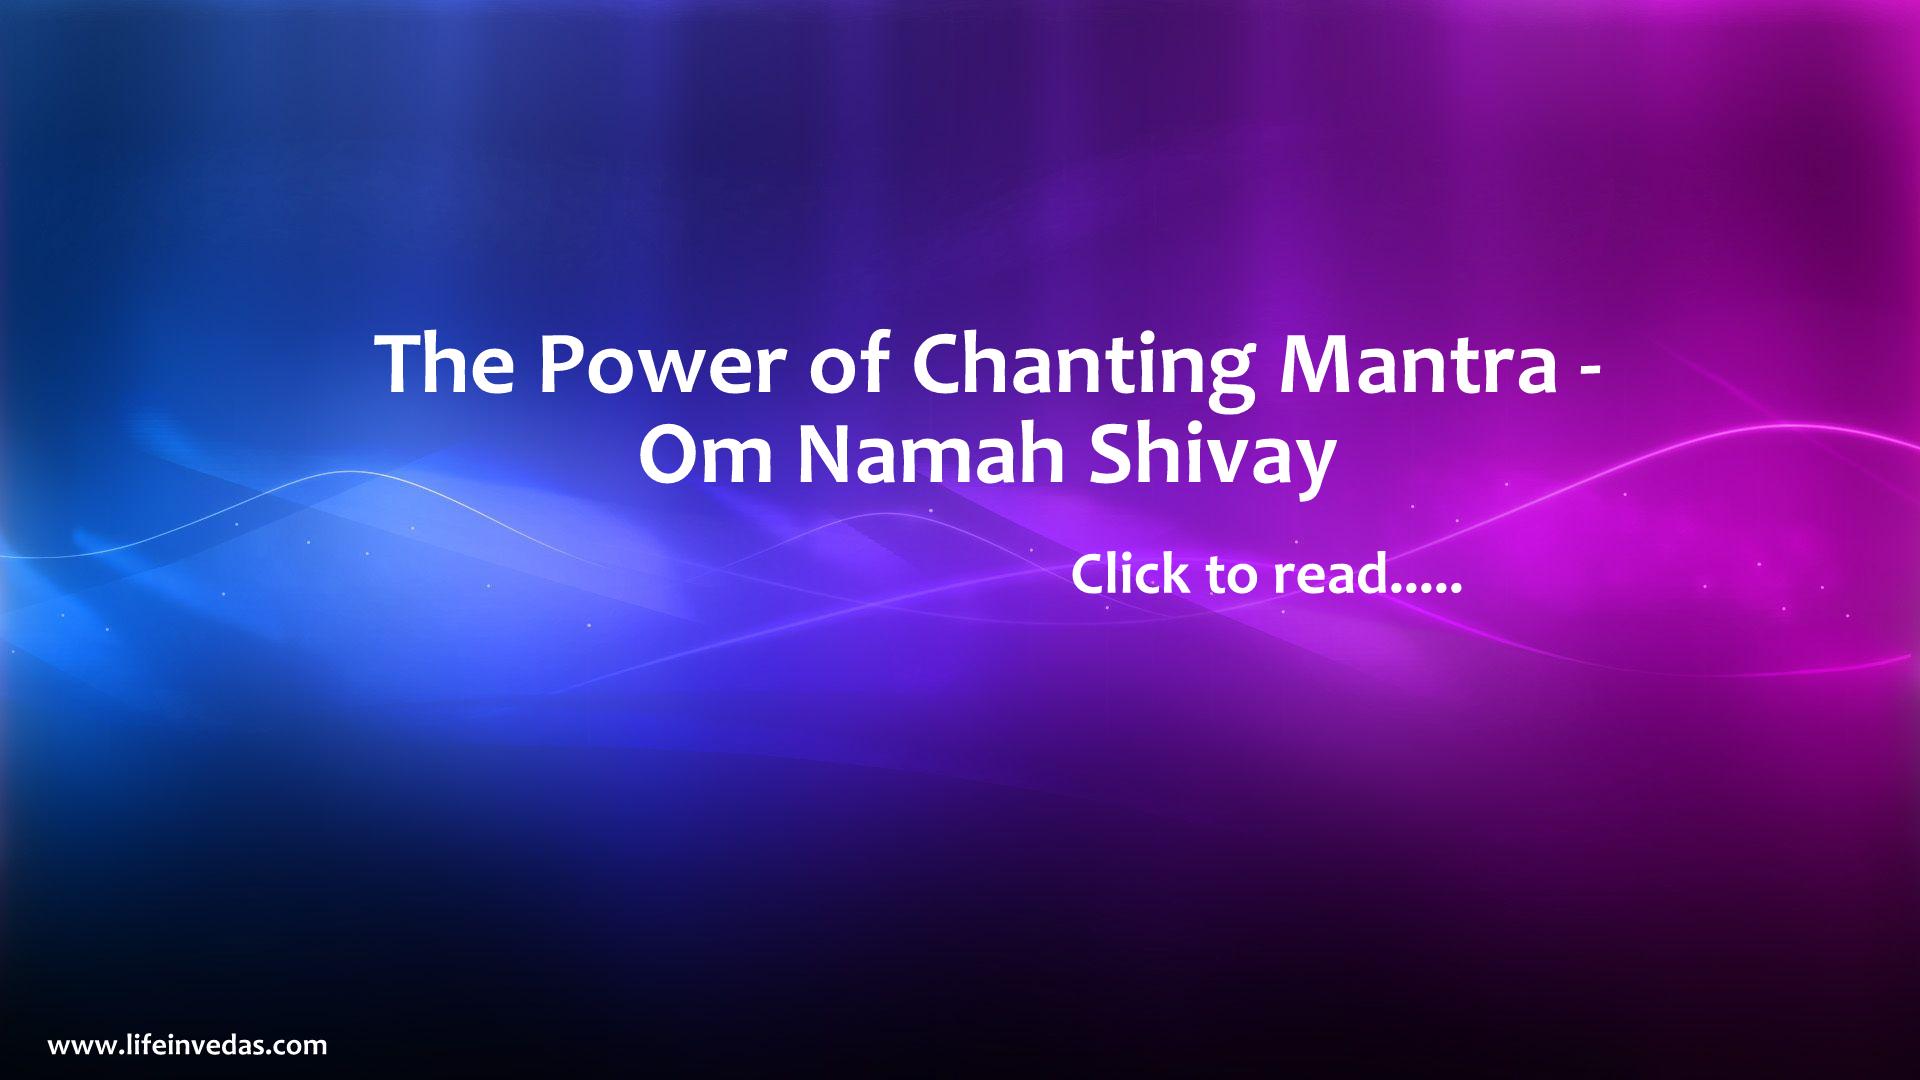 Chanting mantra